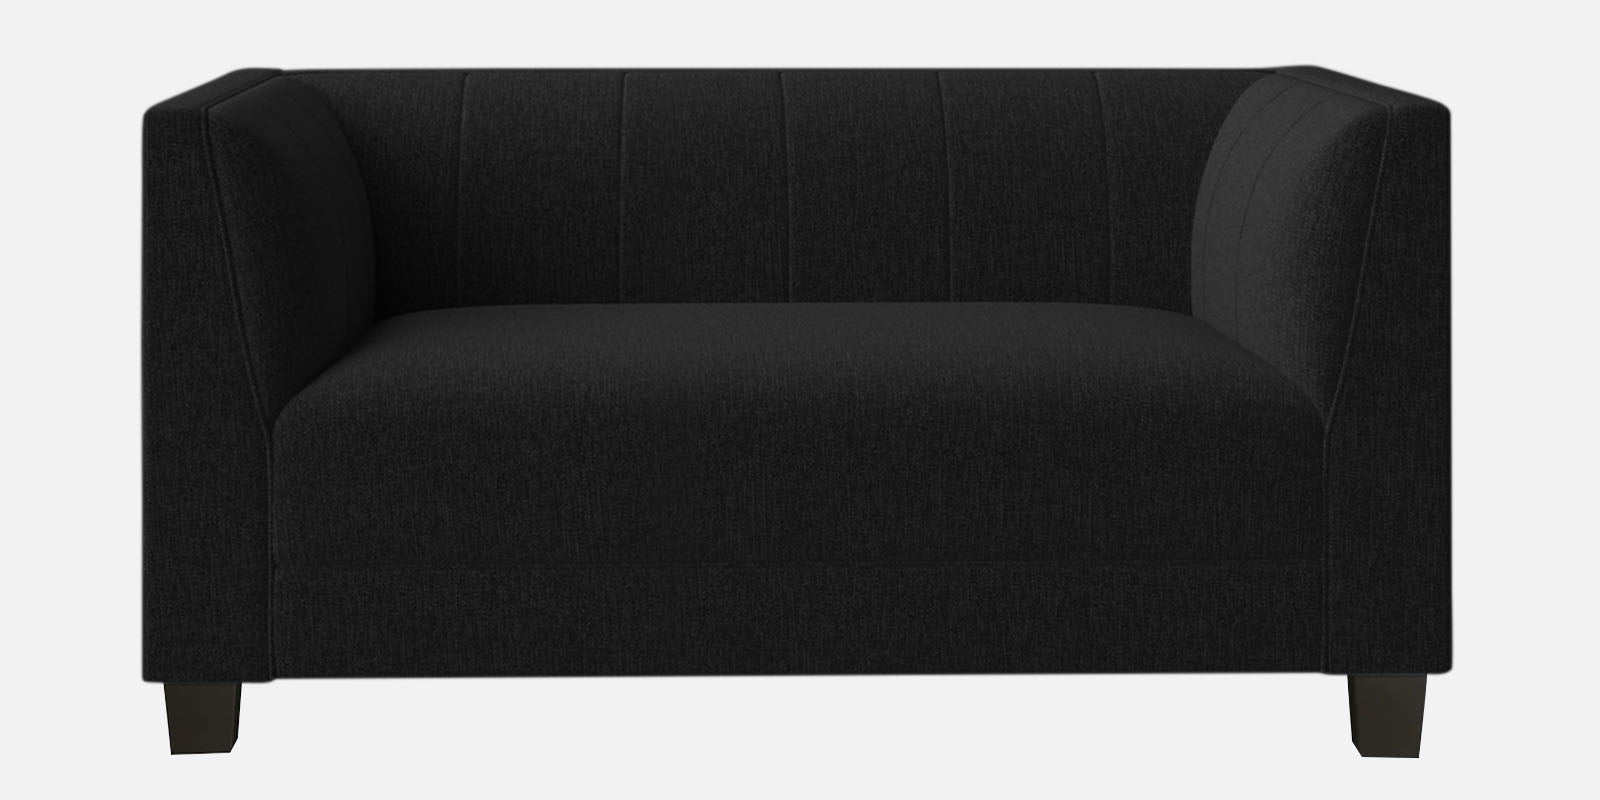 Chastin Fabric 2 Seater Sofa in Zed Black Colour